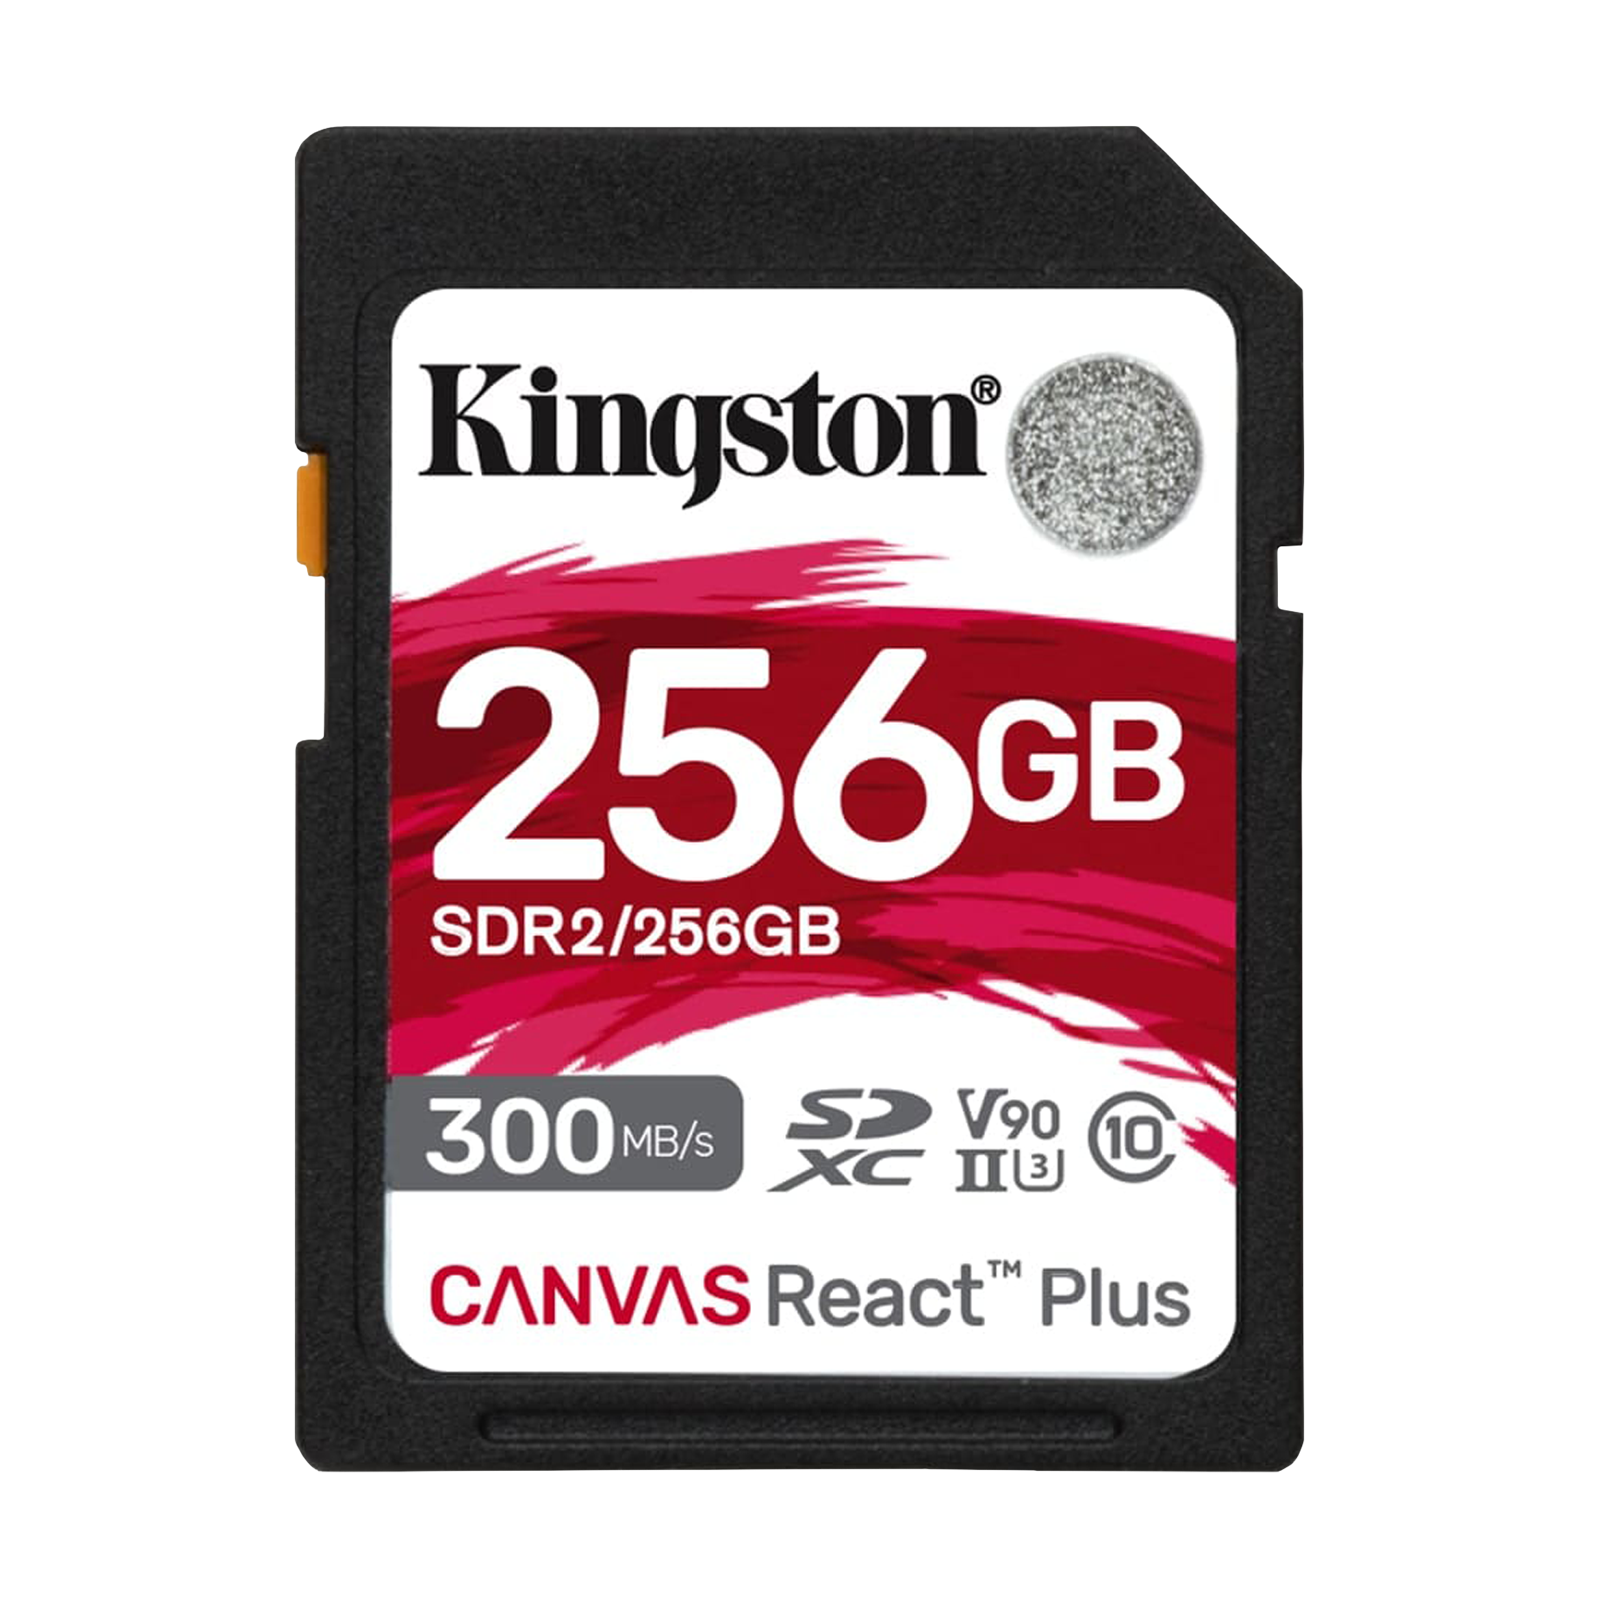 Kingston Canvas React Plus SDXC 256GB Class 10 300MB/s Memory Card